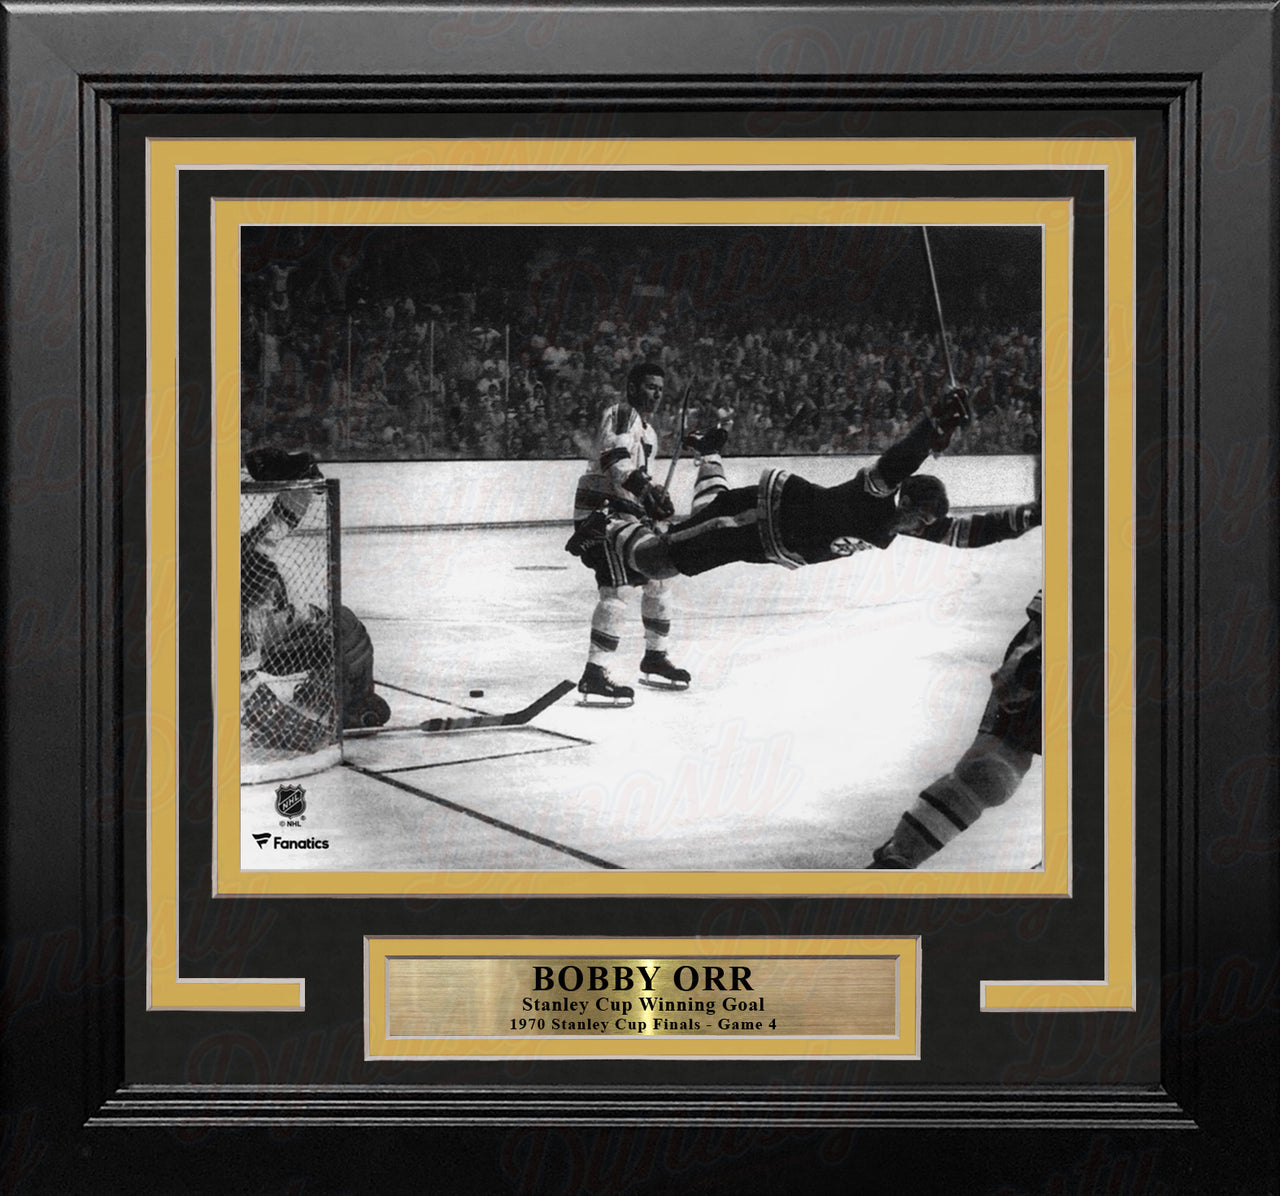 Bobby Orr Boston Bruins 1970 Stanley Cup Game-Winning Goal 8" x 10" Framed Hockey Photo - Dynasty Sports & Framing 